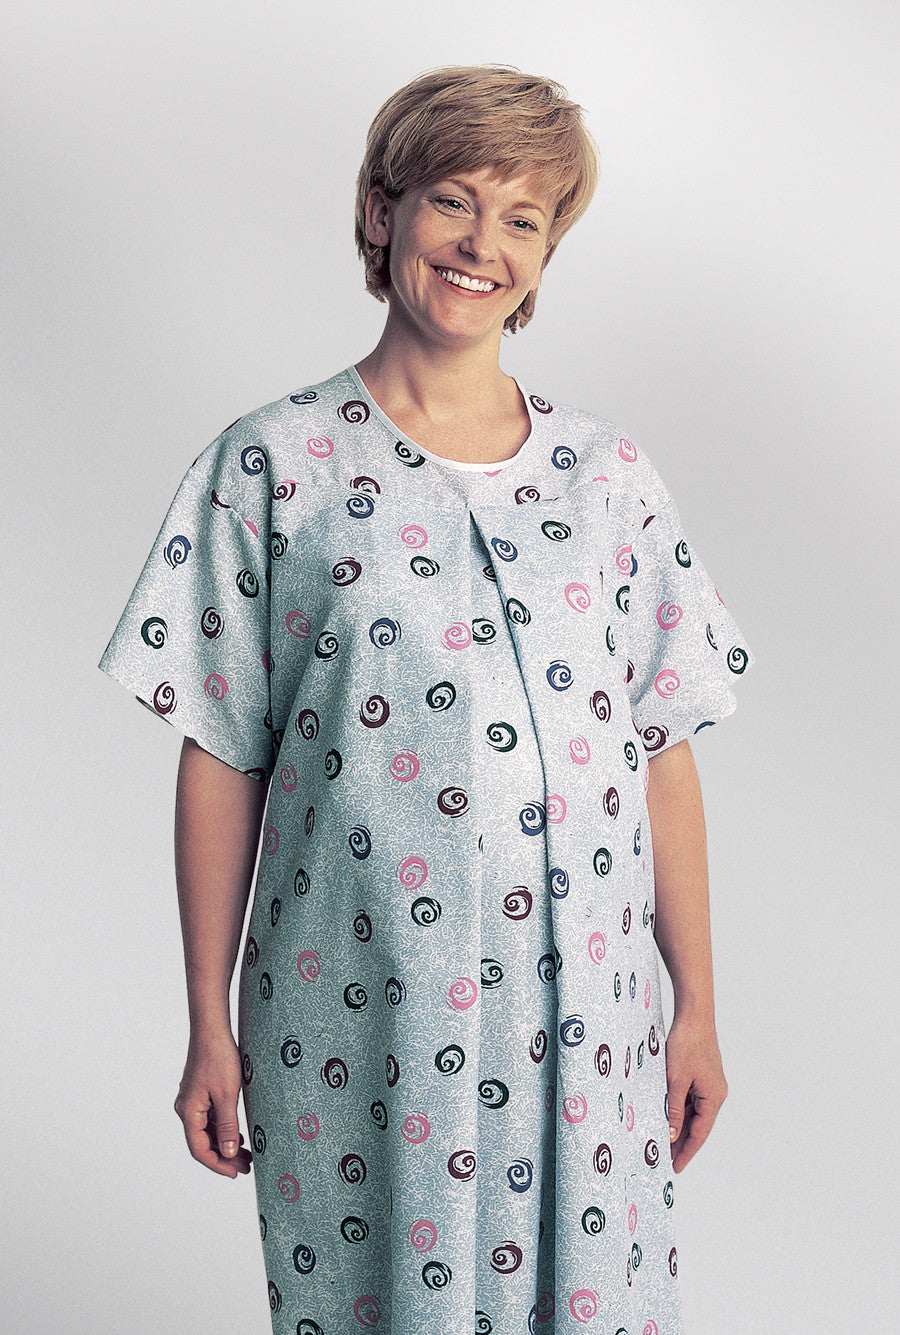 Maternity I.V. Hospital Gown (Dozen) - BH Medwear